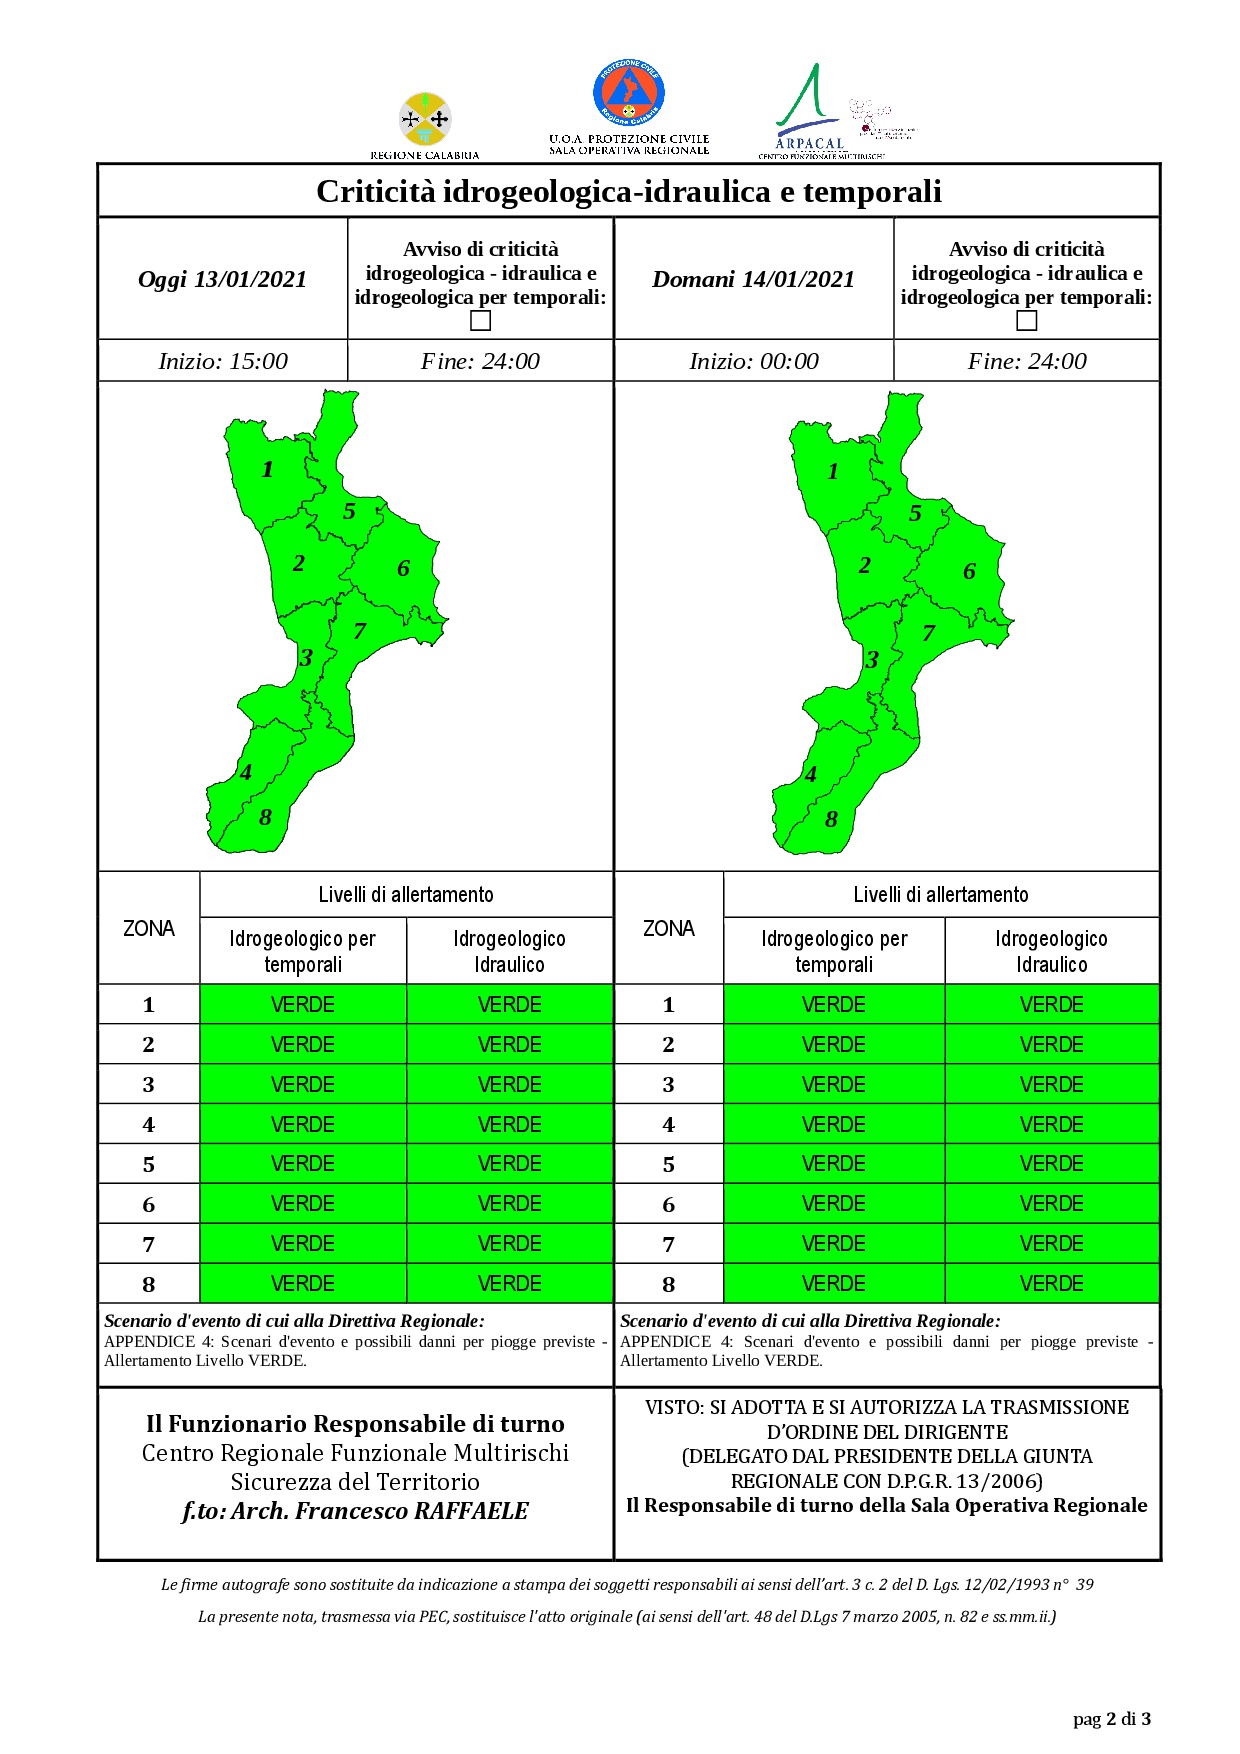 Criticità idrogeologica-idraulica e temporali in Calabria 13-01-2021